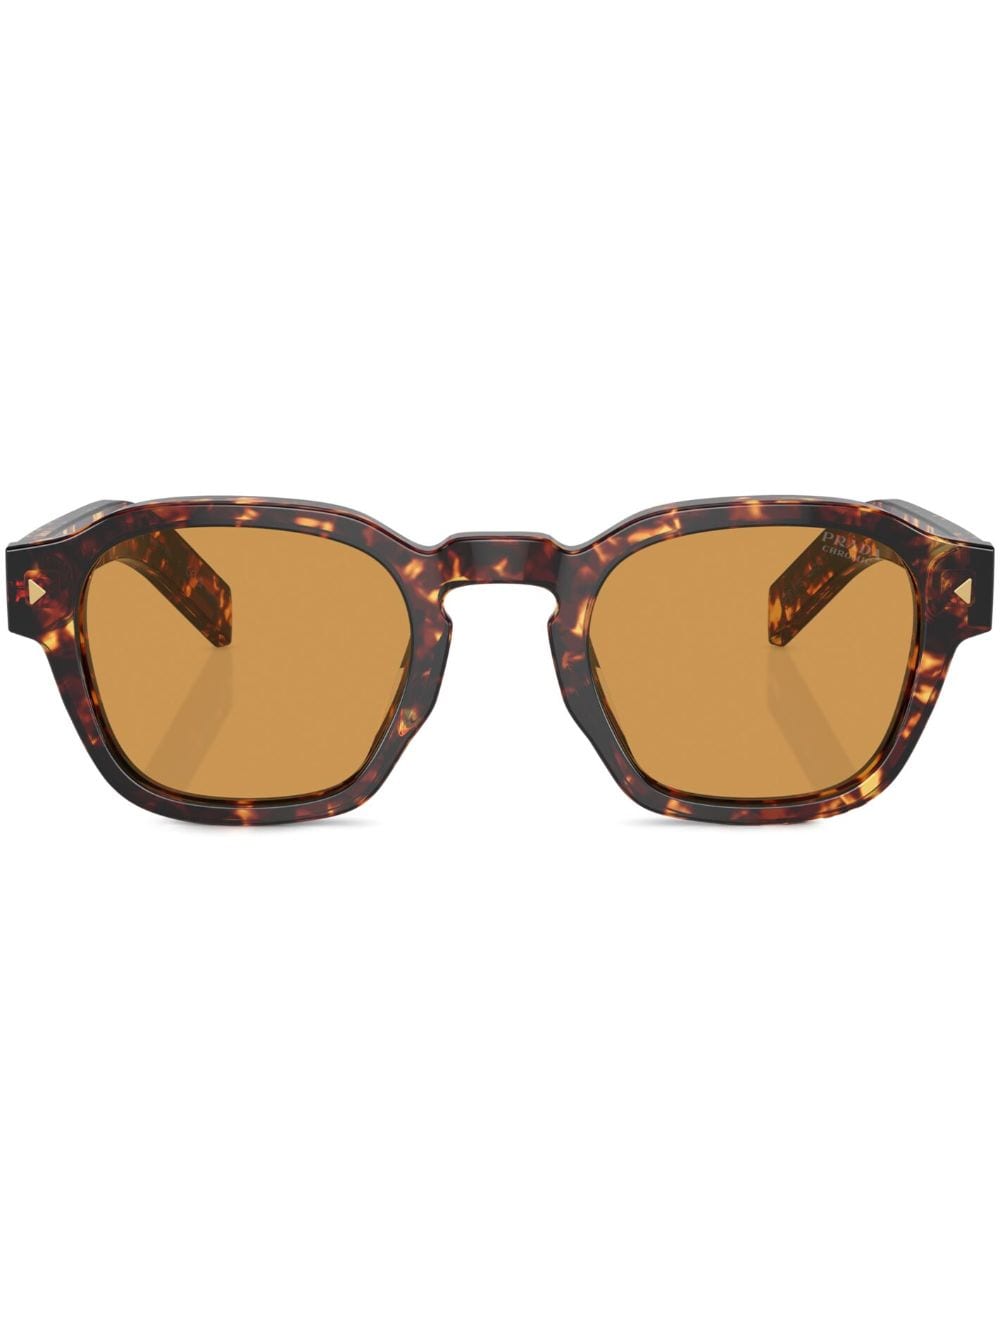 Prada Tortoiseshell-effect Round-frame Sunglasses In Brown